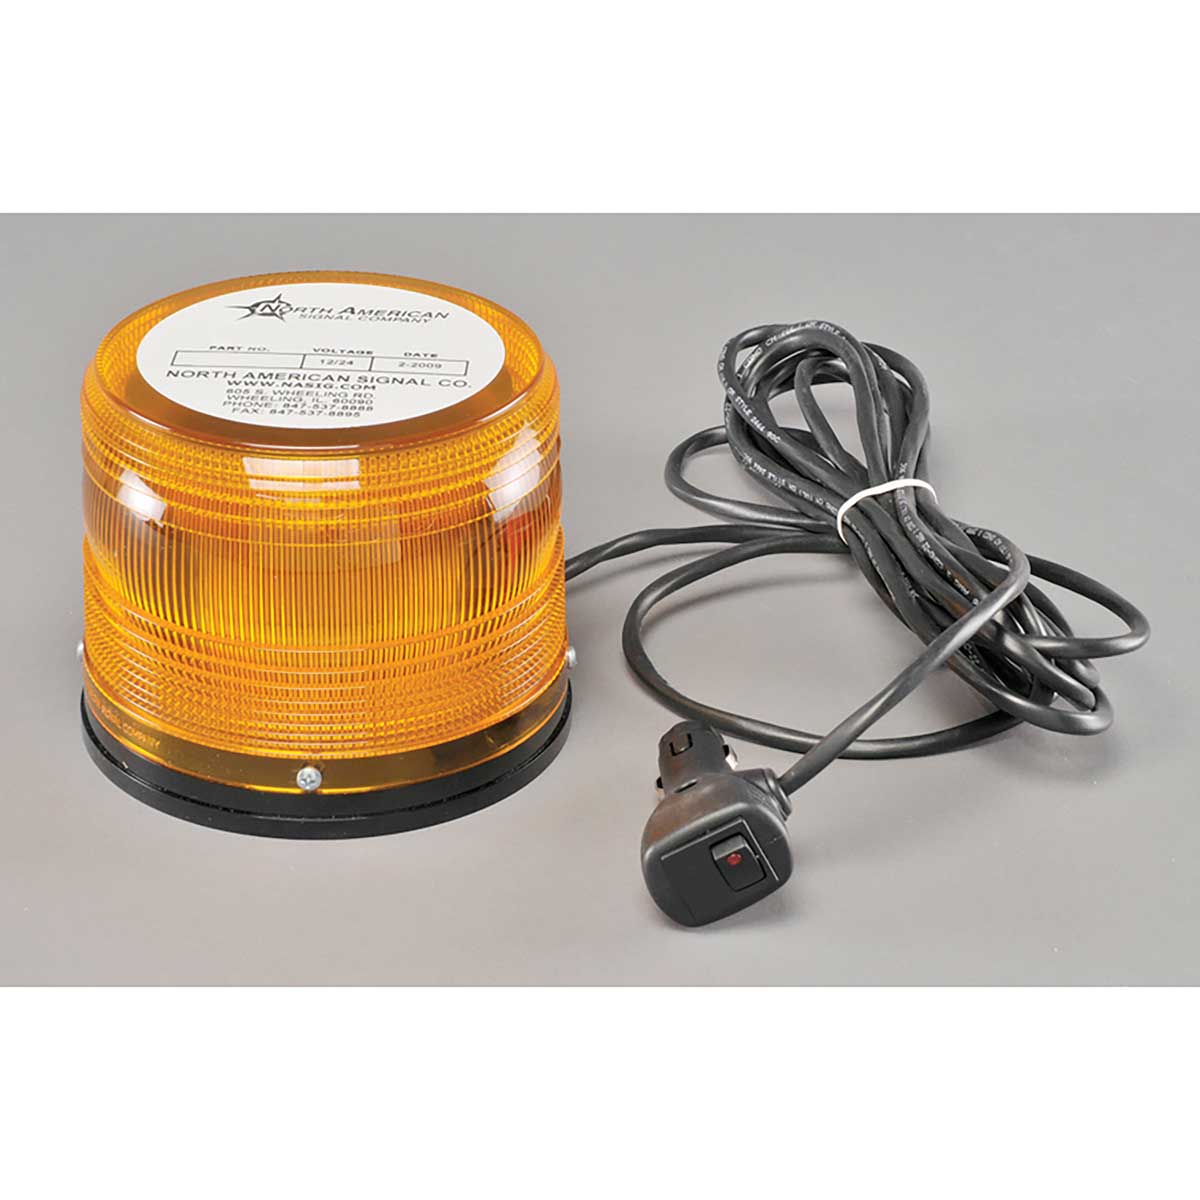 North American Signal 675 LED Max Power 360 Lights